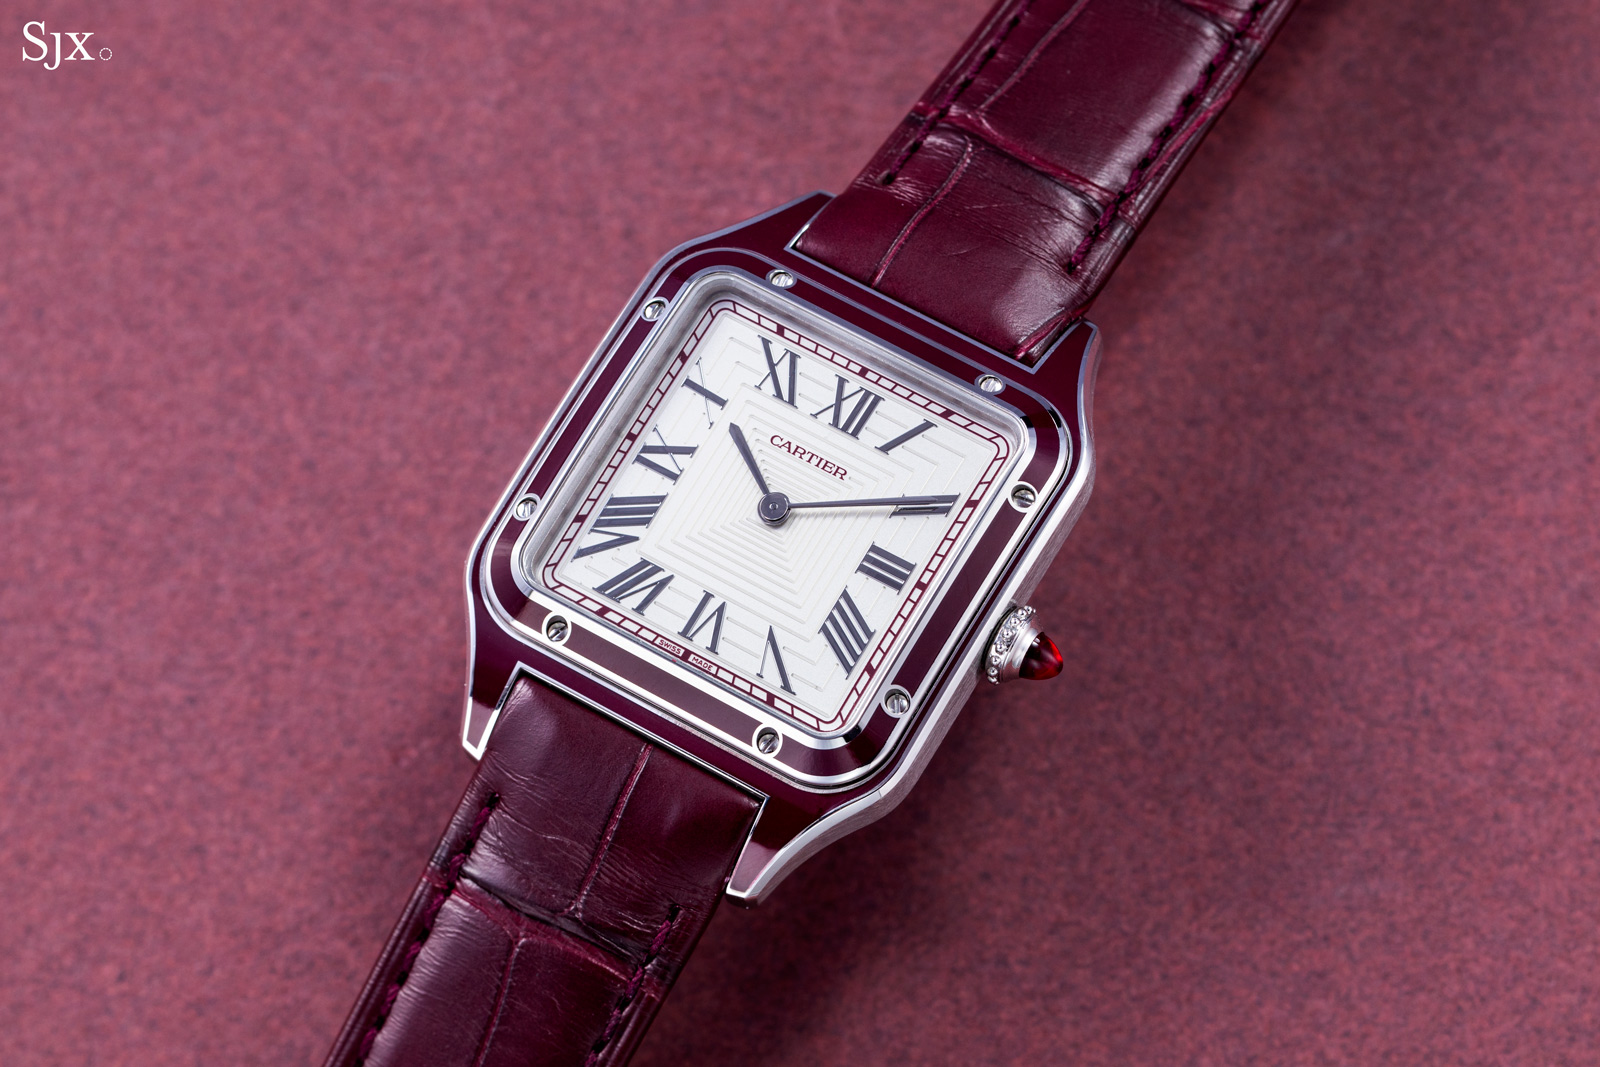 Hands On: Cartier Santos-Dumont “Lacquered Case” | SJX Watches